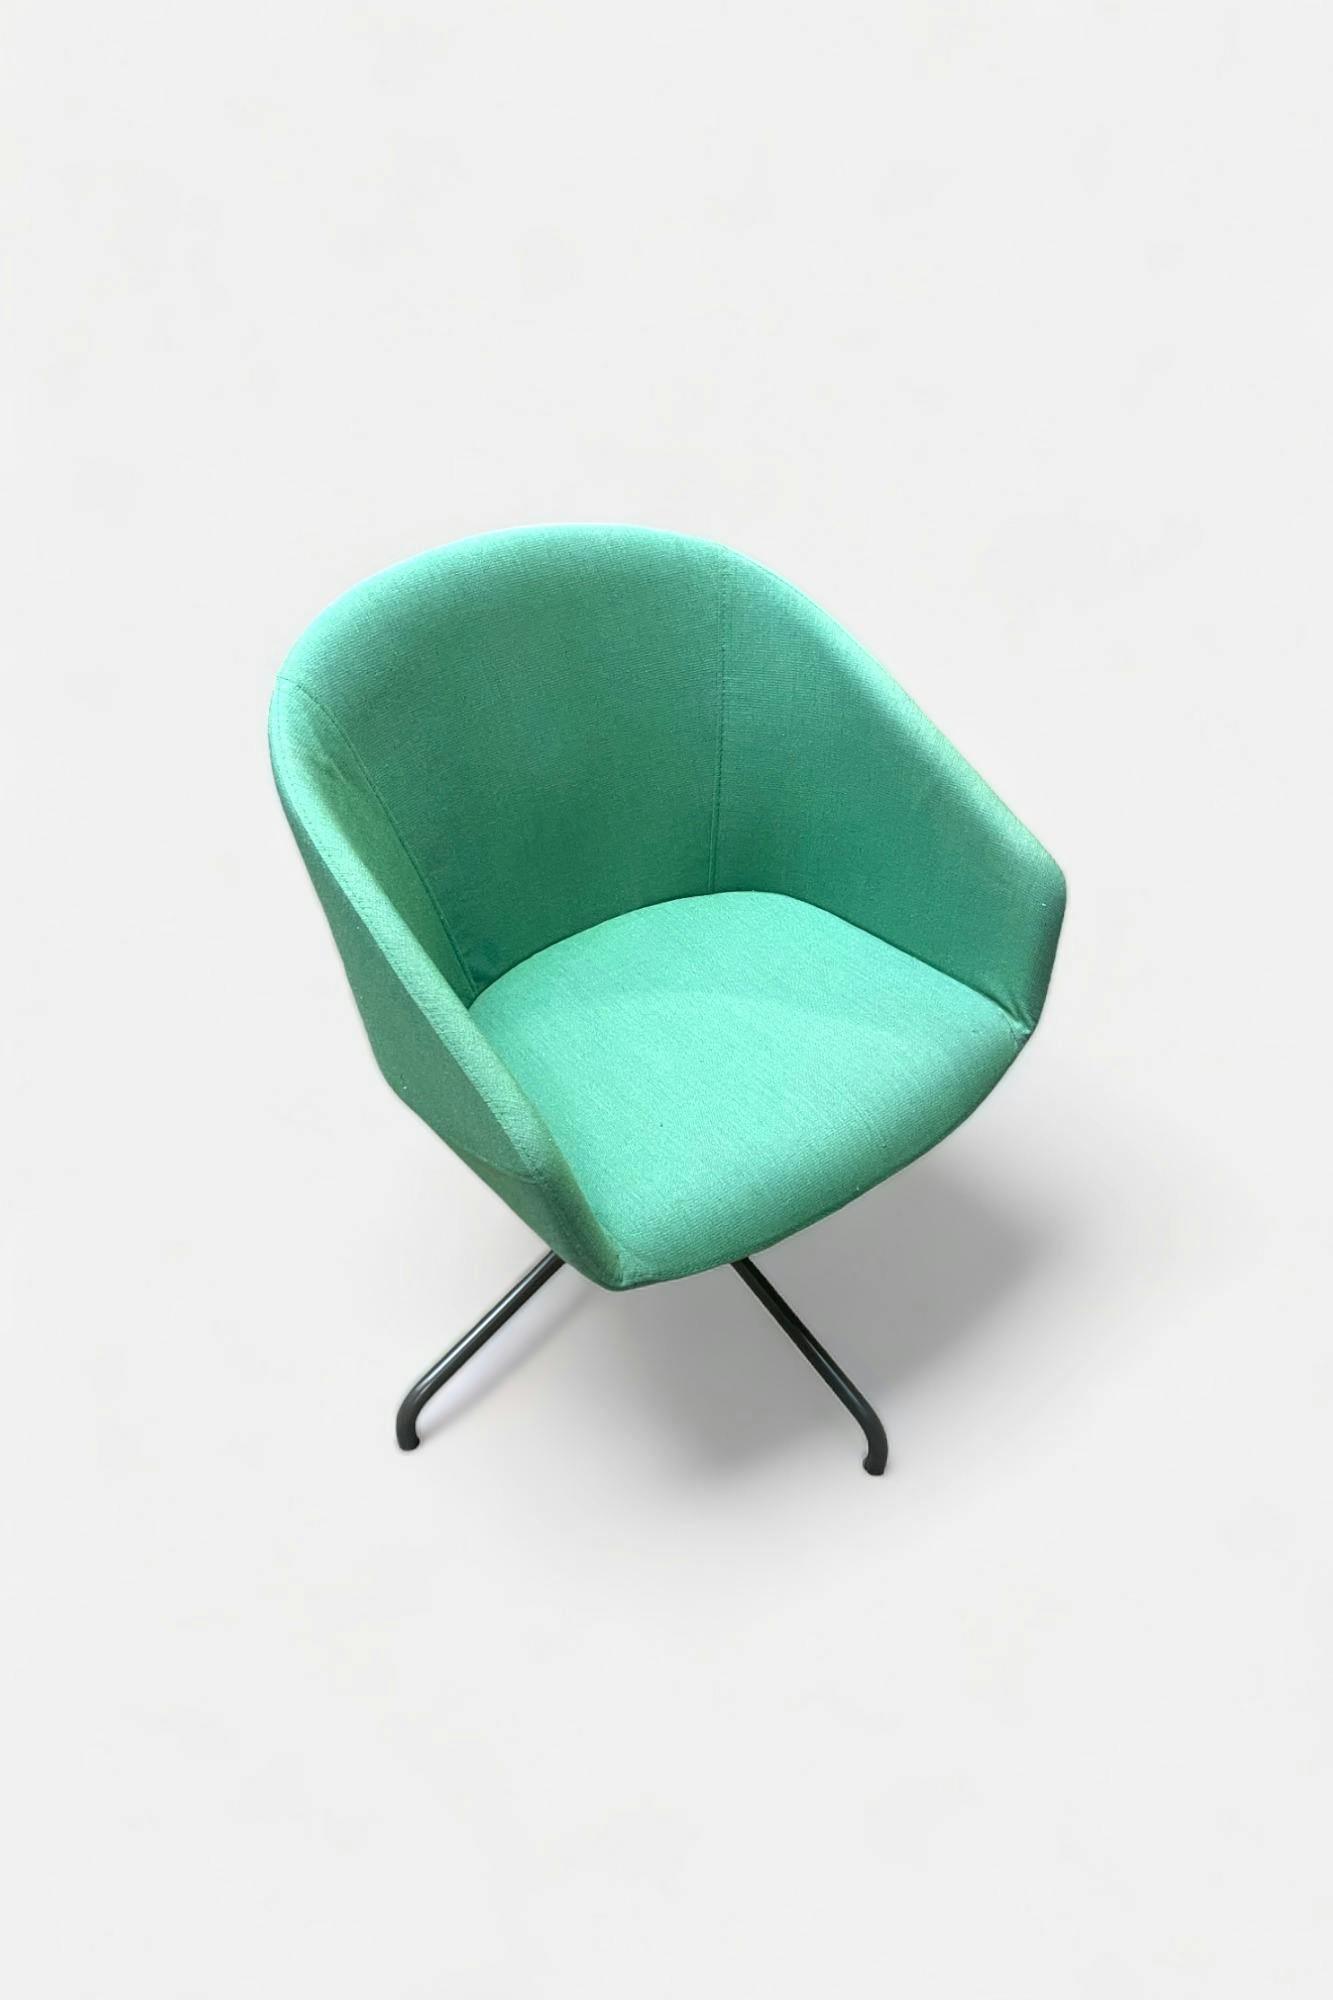 Green sofa BEJOT - Relieve Furniture